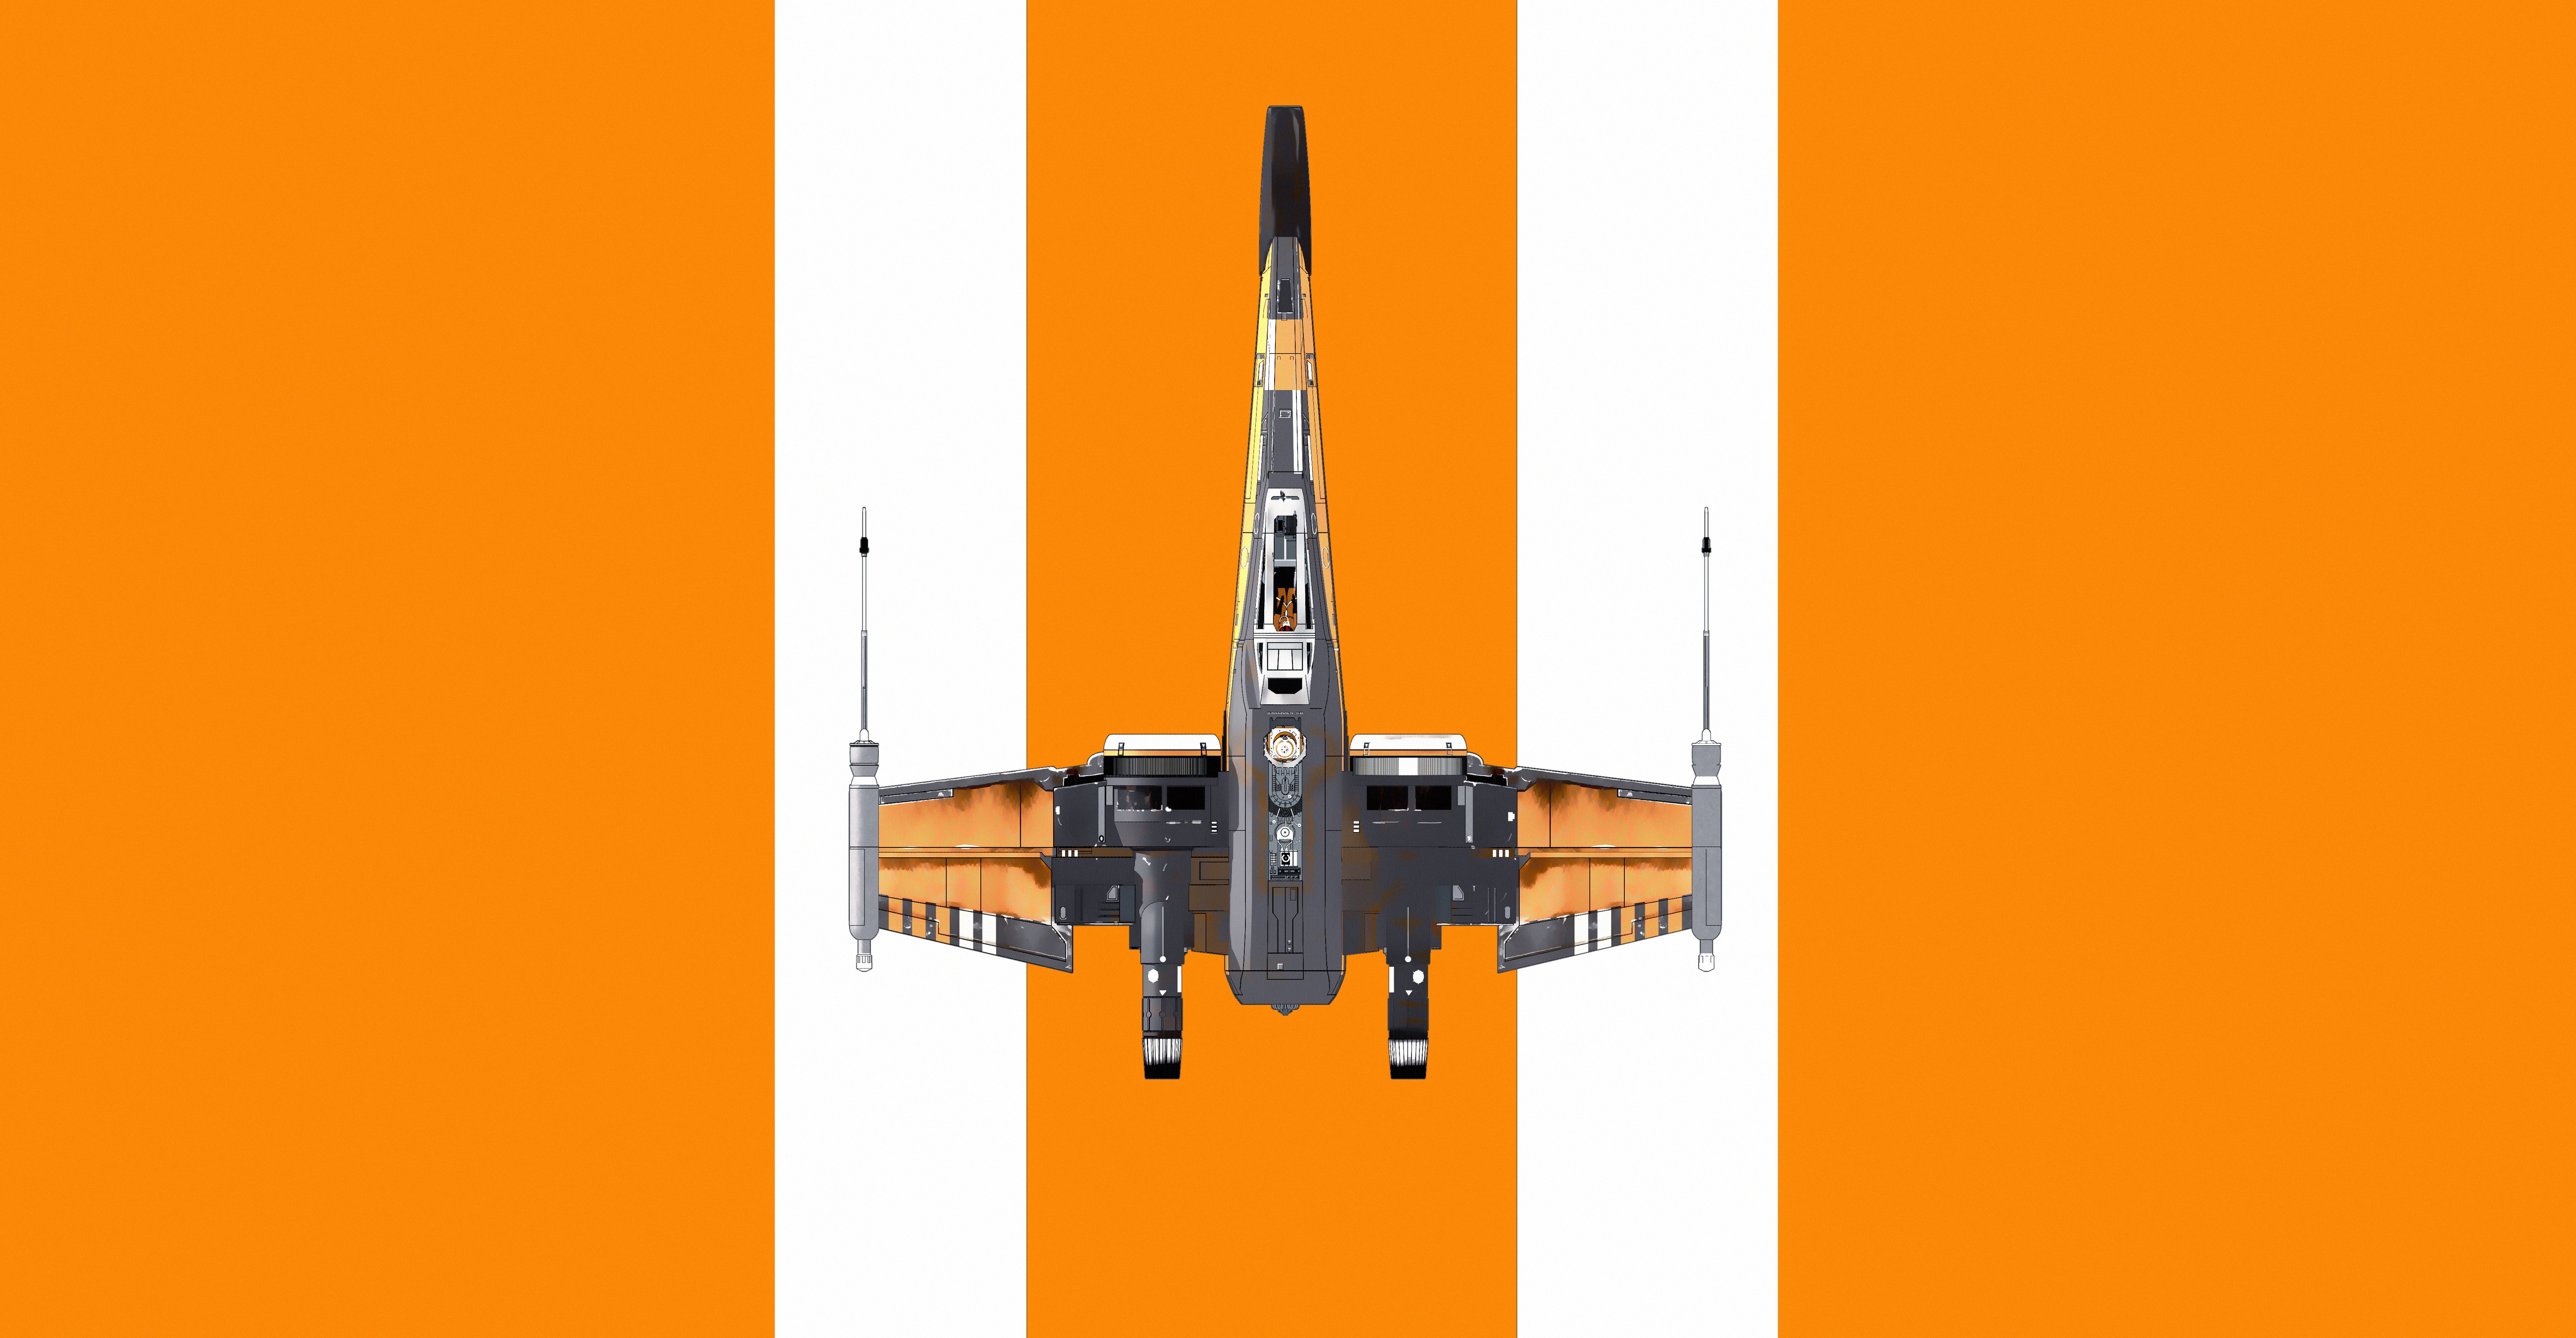 General 5200x2700 vehicle Star Wars spaceship X-wing artwork top view orange orange background